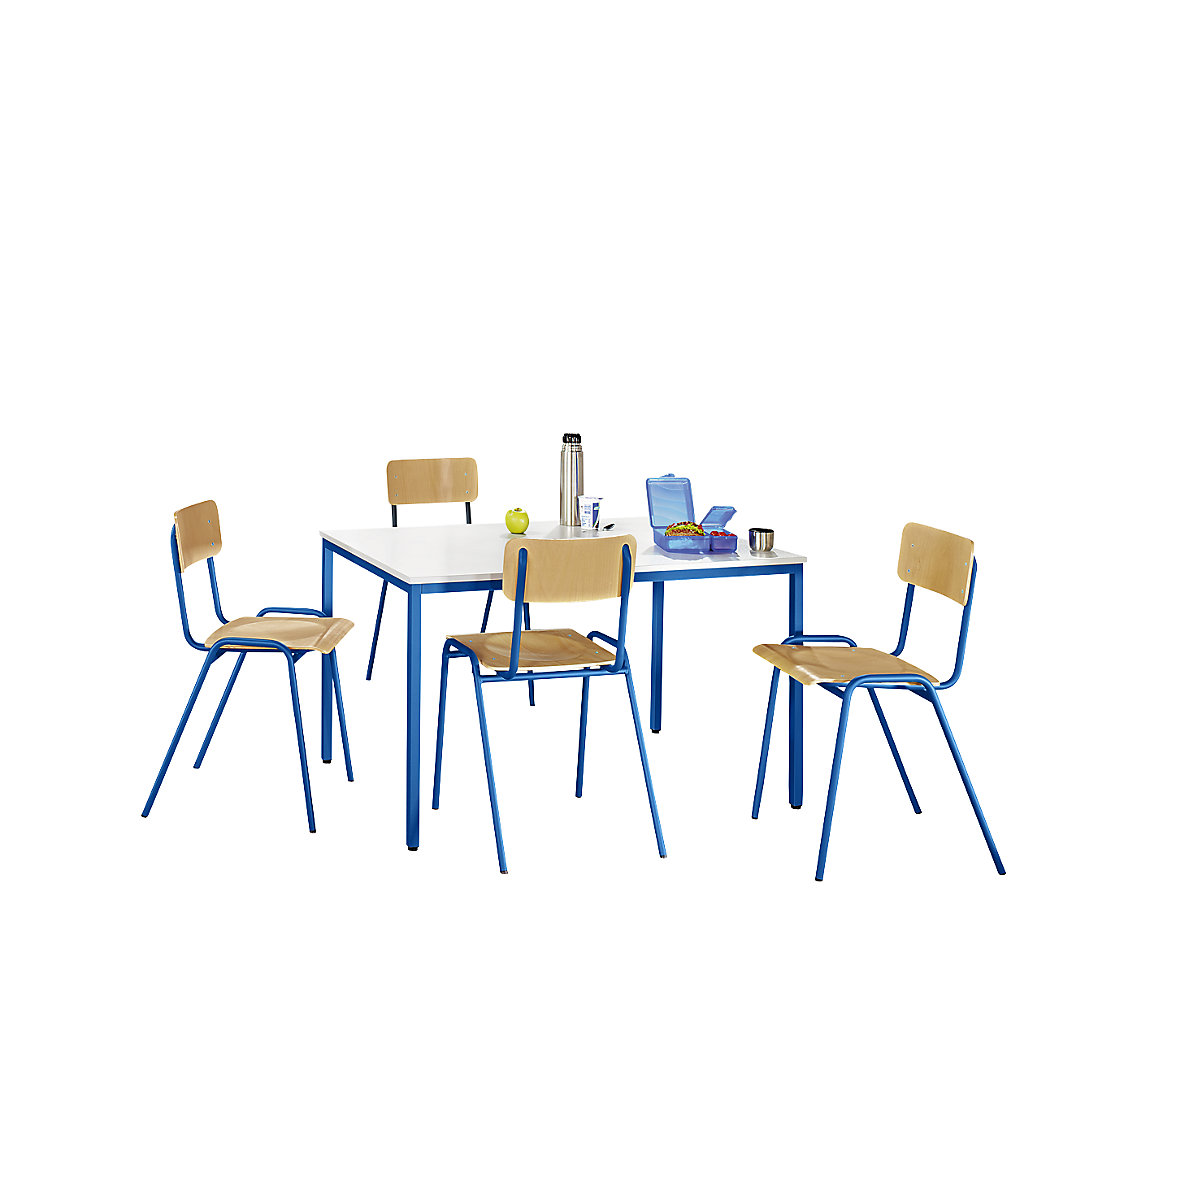 EUROKRAFTbasic – Multi-purpose seating unit, 1 table, 4 chairs, tabletop in light grey, gentian blue frame